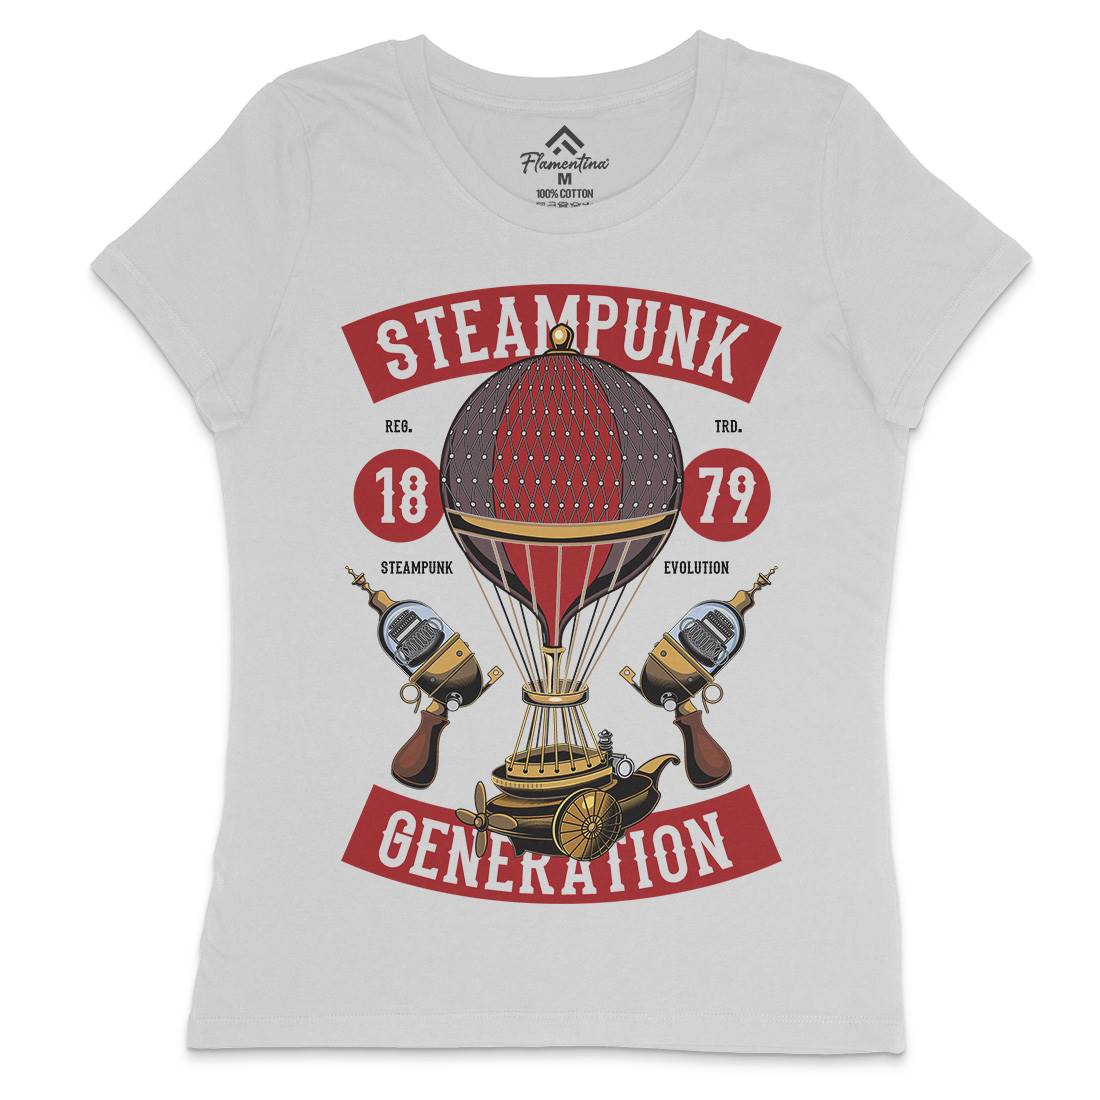 Generation Womens Crew Neck T-Shirt Steampunk C449